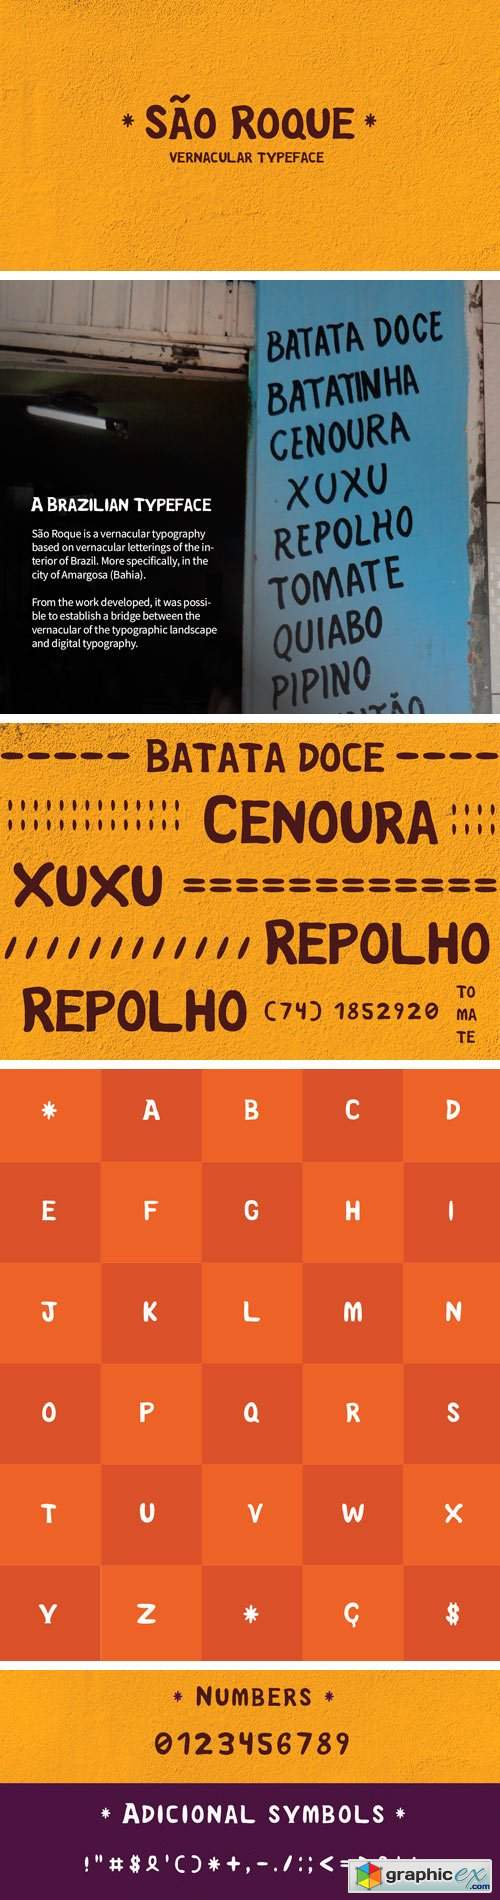 Sao Roque Typeface